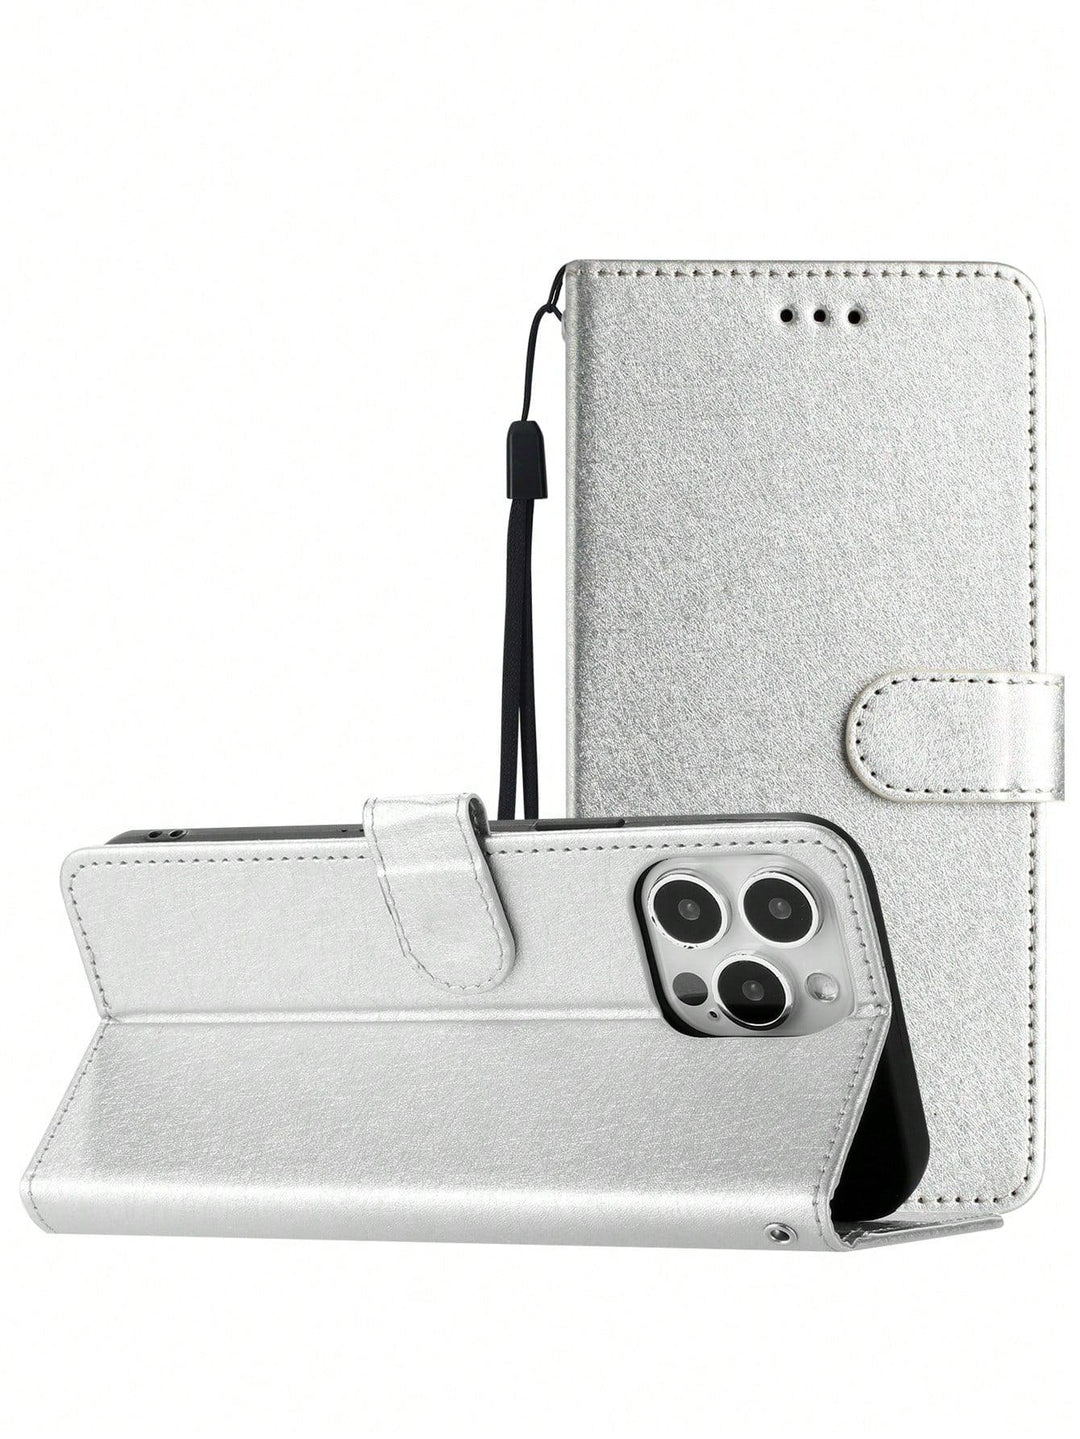 Silver Premium Solid PU Phone Cases - Brand My Case